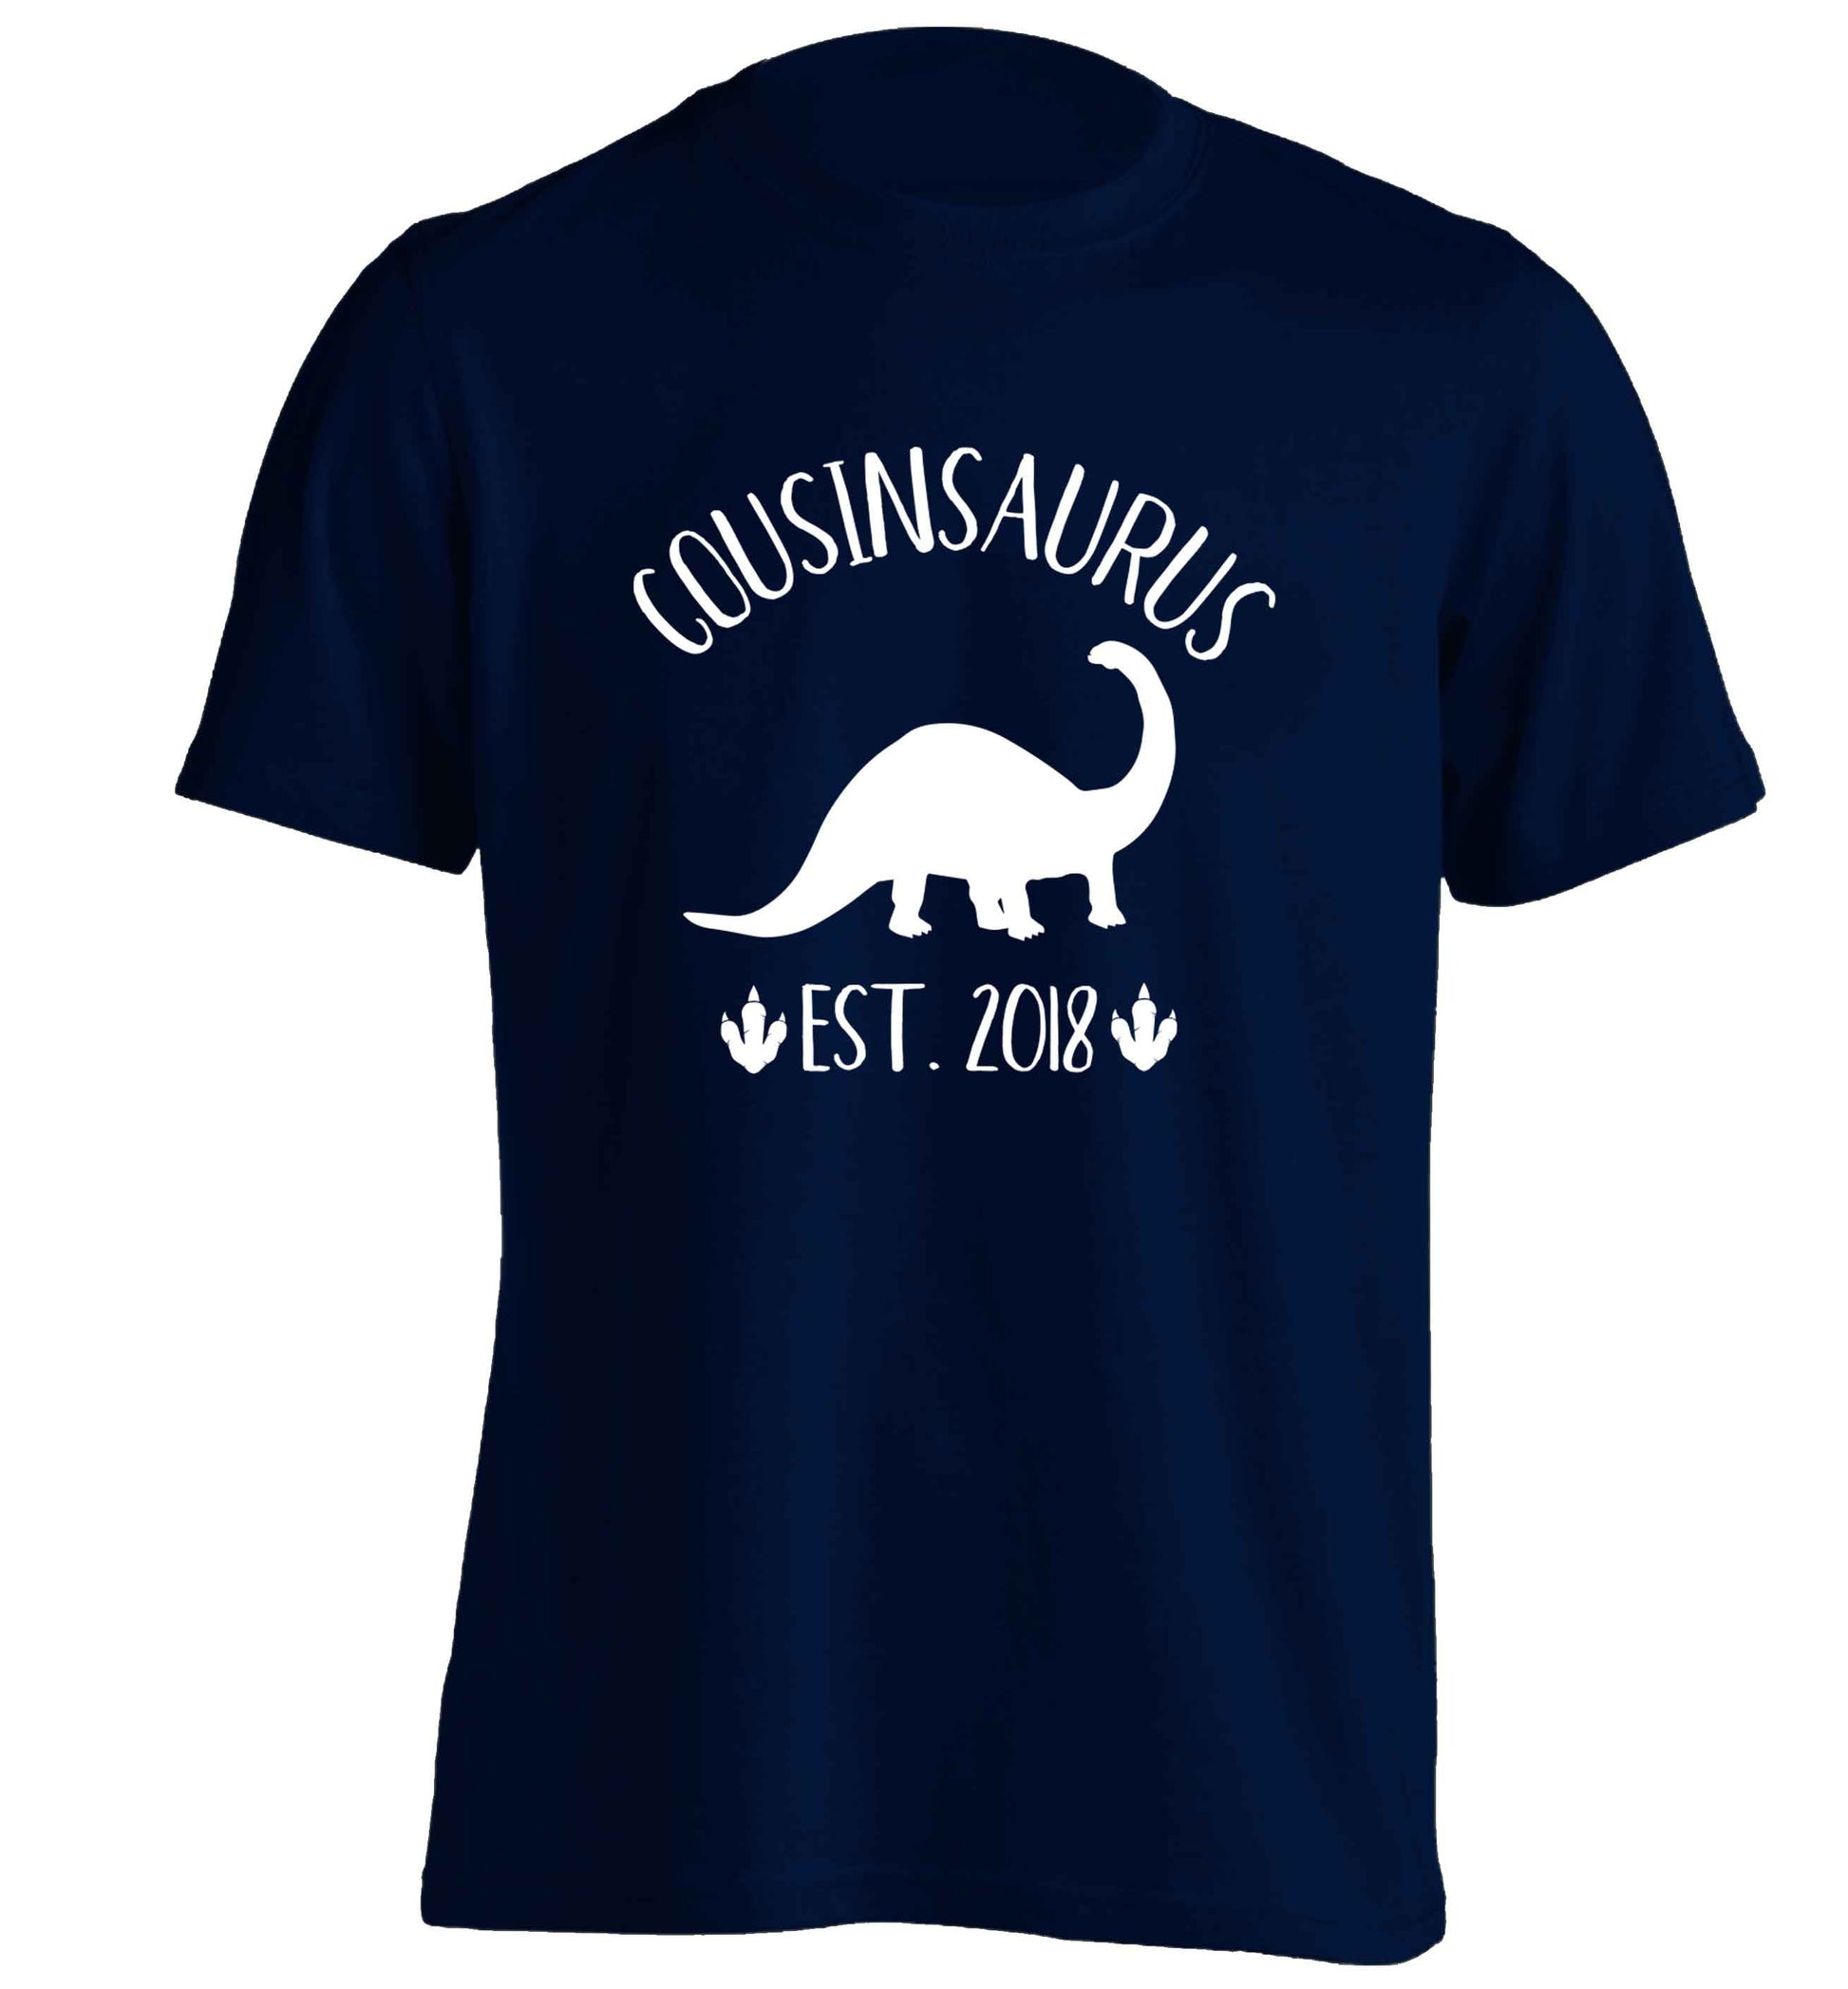 Personalised cousinsaurus since (custom date) adults unisex navy Tshirt 2XL